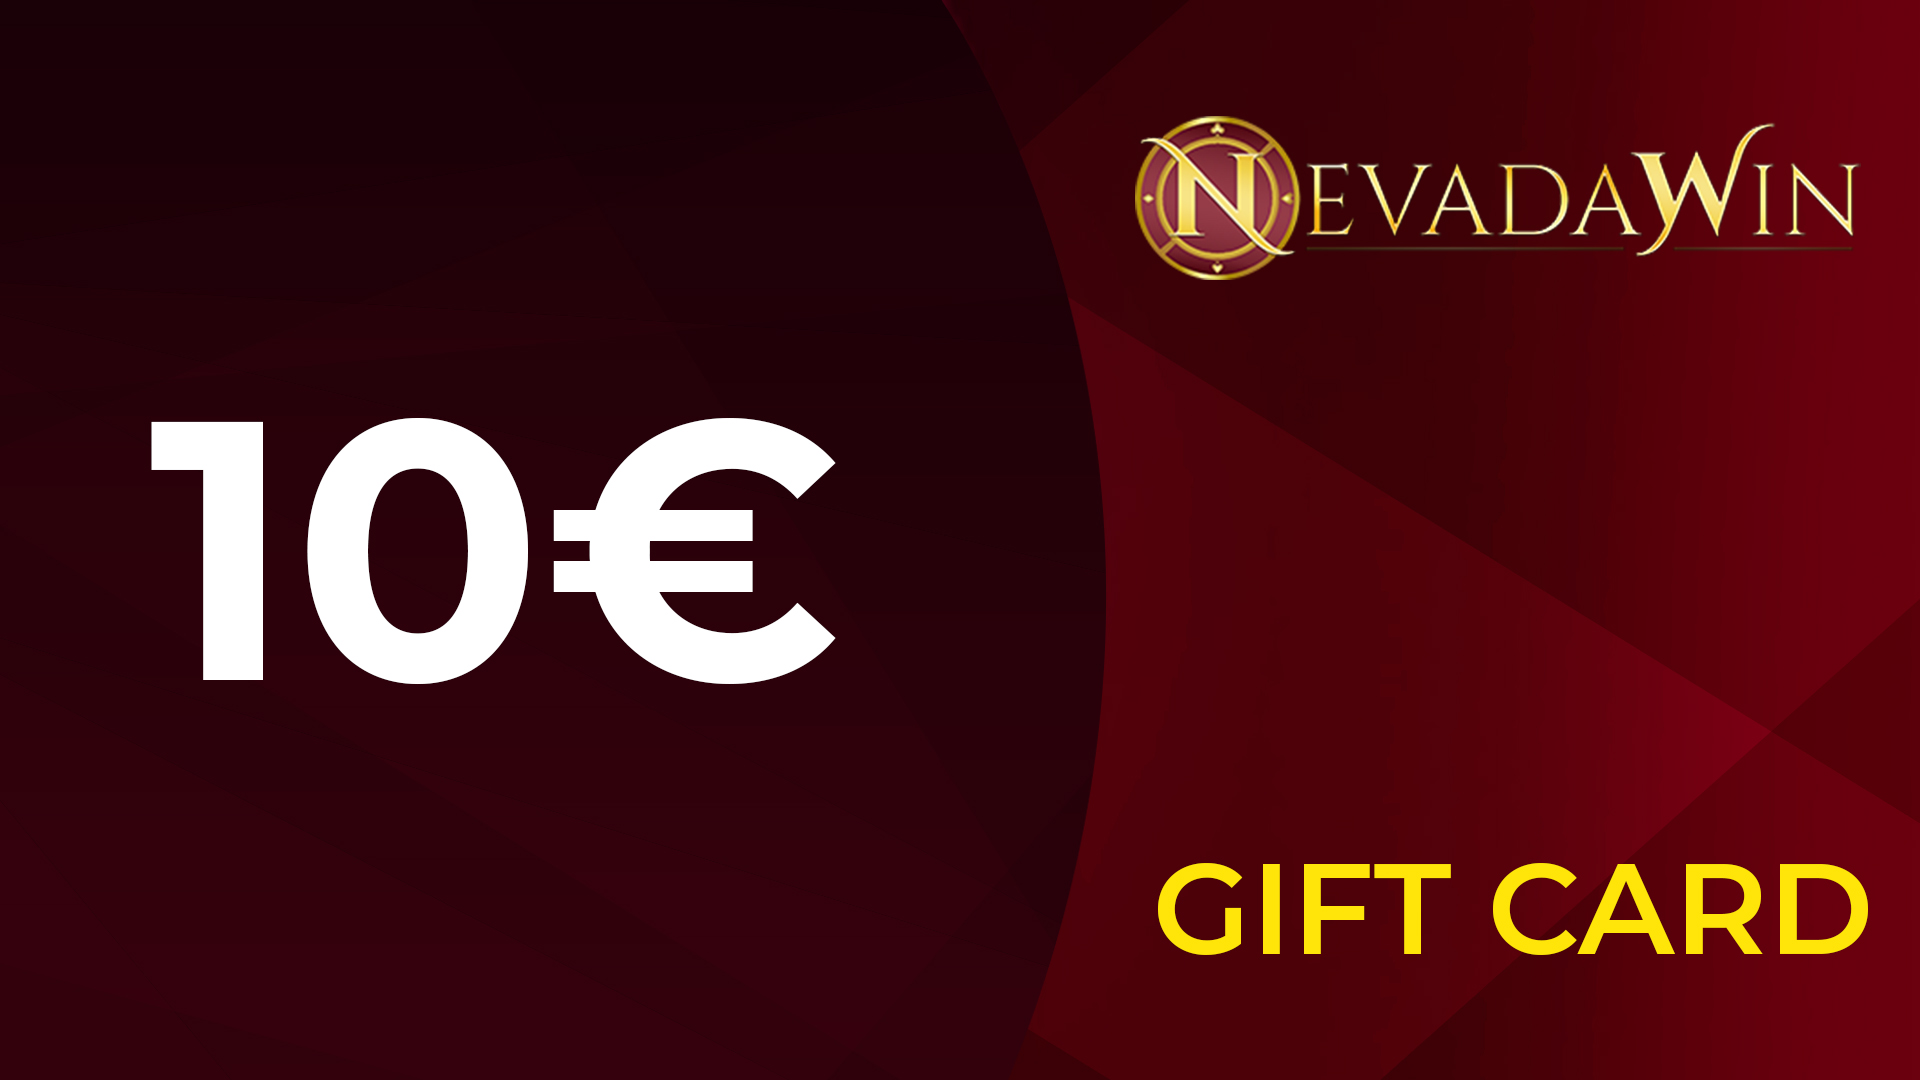 NevadaWin €10 Giftcard, 10.99$